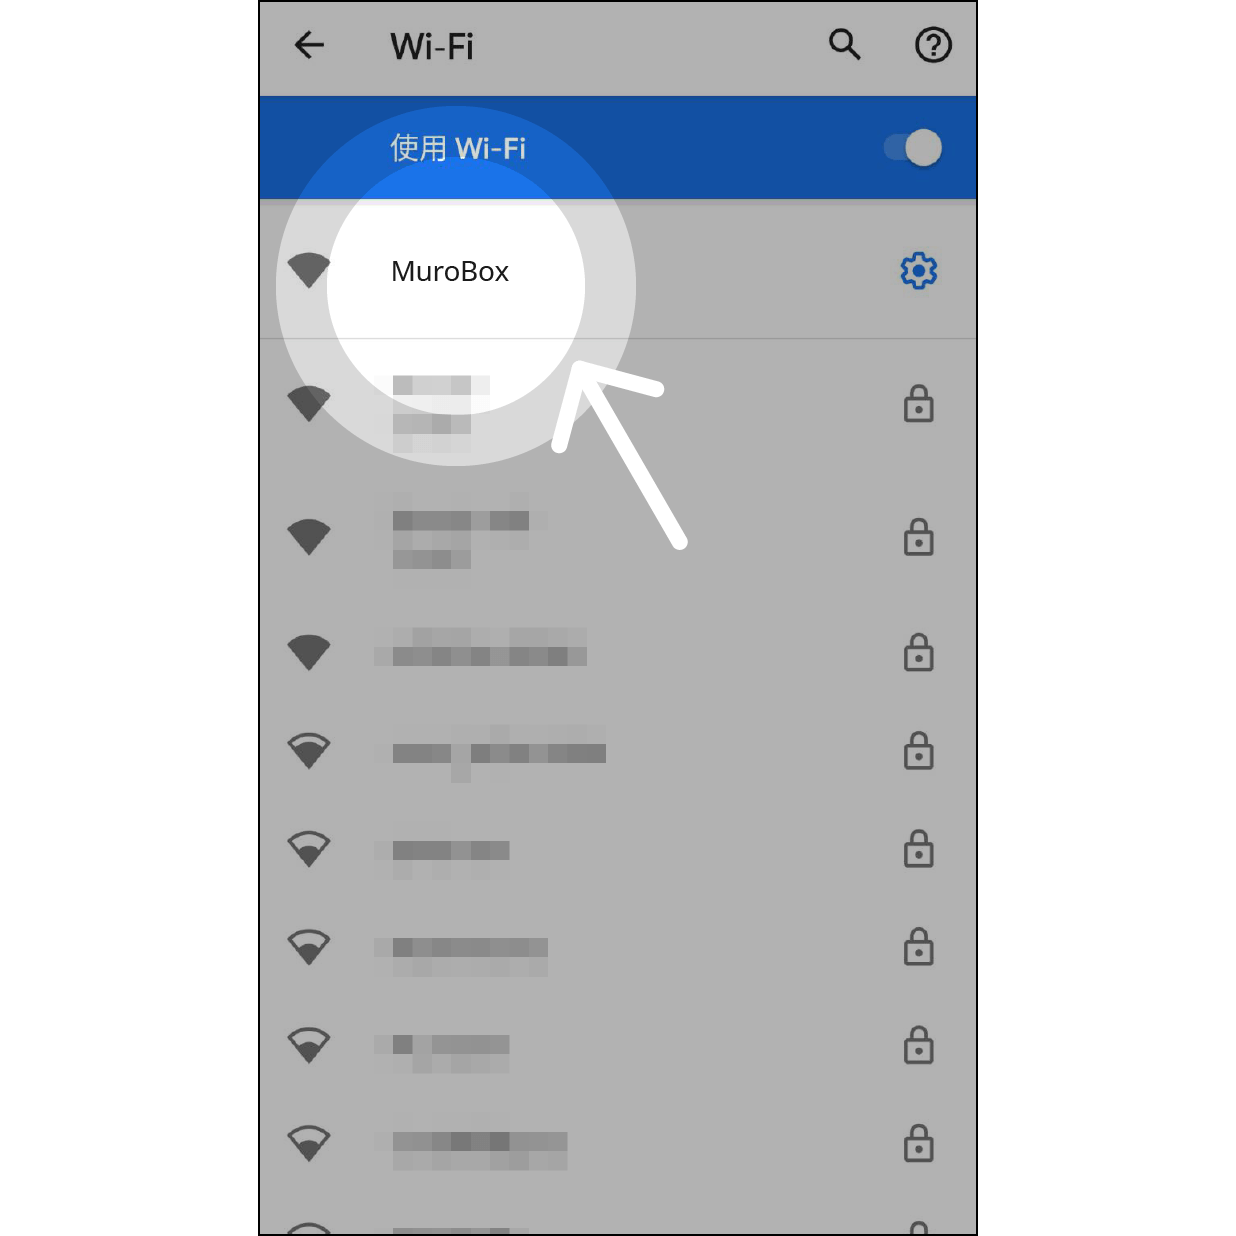 6. 以 Wi-Fi 联机 MuroBox 新版 Android 的手机会自动联机 Muro Box。若是旧版 Android 则需手动点下方「Wi-Fi 设定」后，对名称 为「MuroBox」的网络进行联机。联机成功后，按屏幕下方返回键回到 Muro Box app。